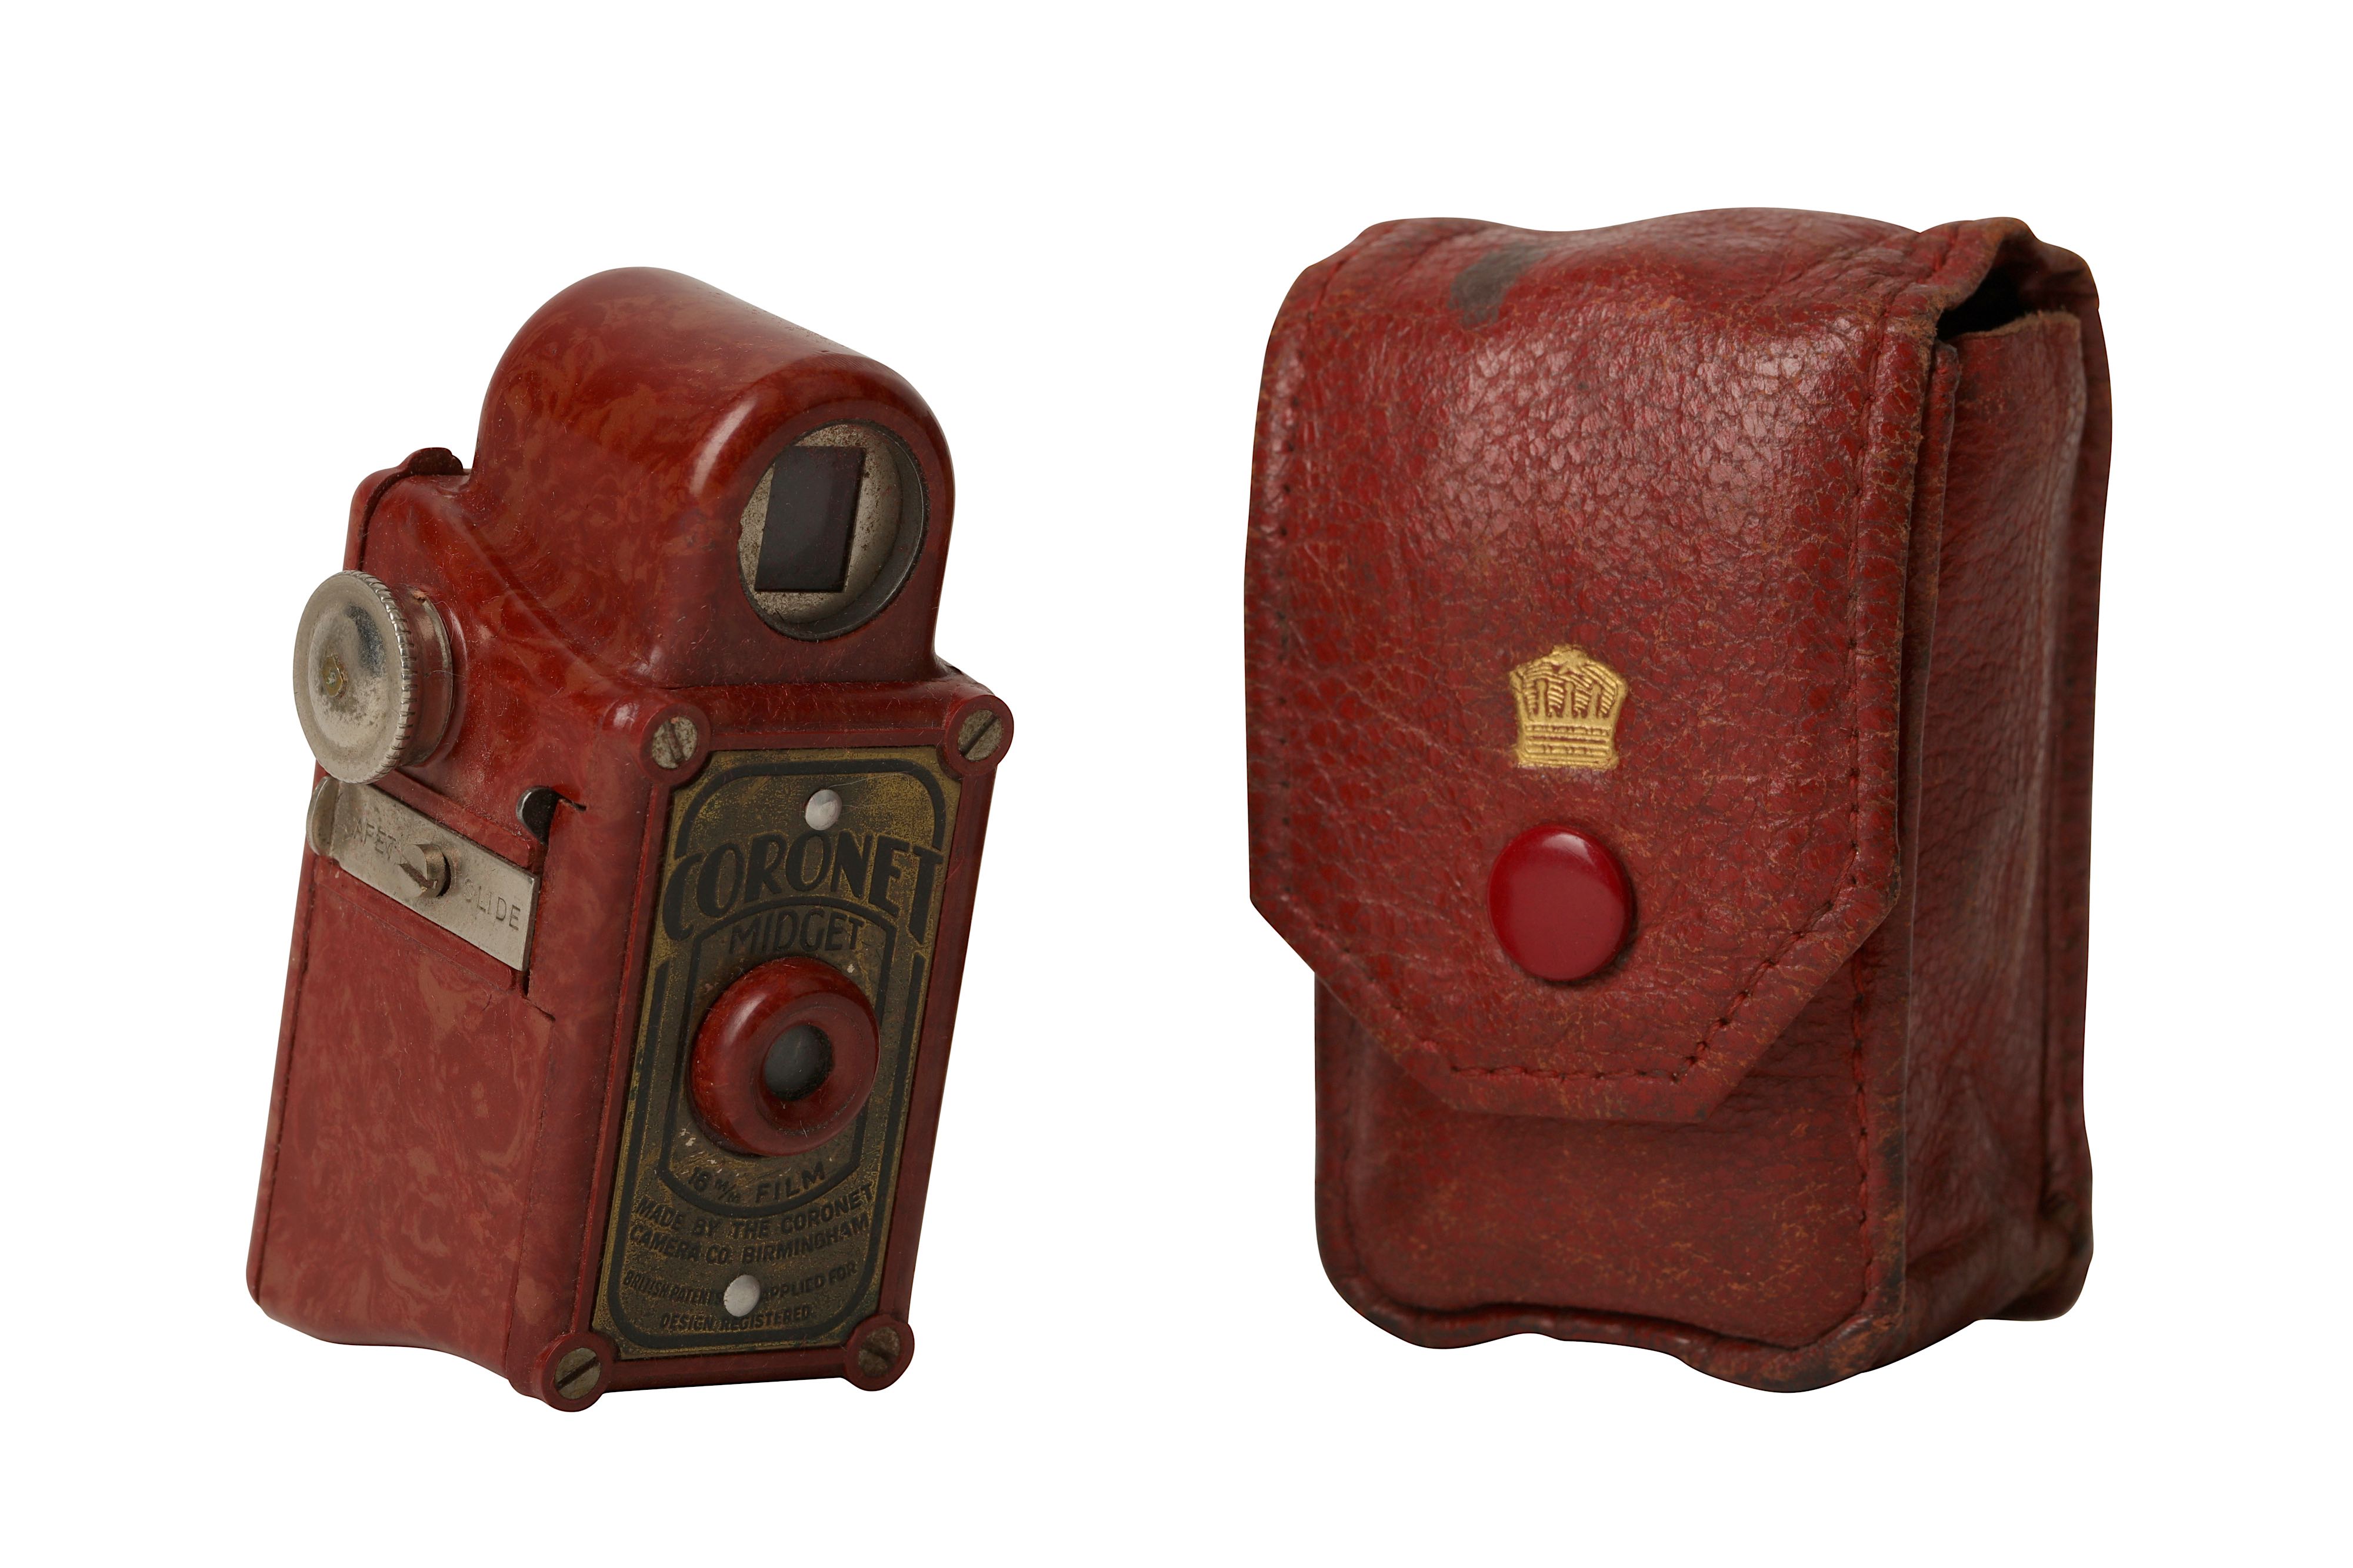 A Coronet Midget Sub Miniature Camera